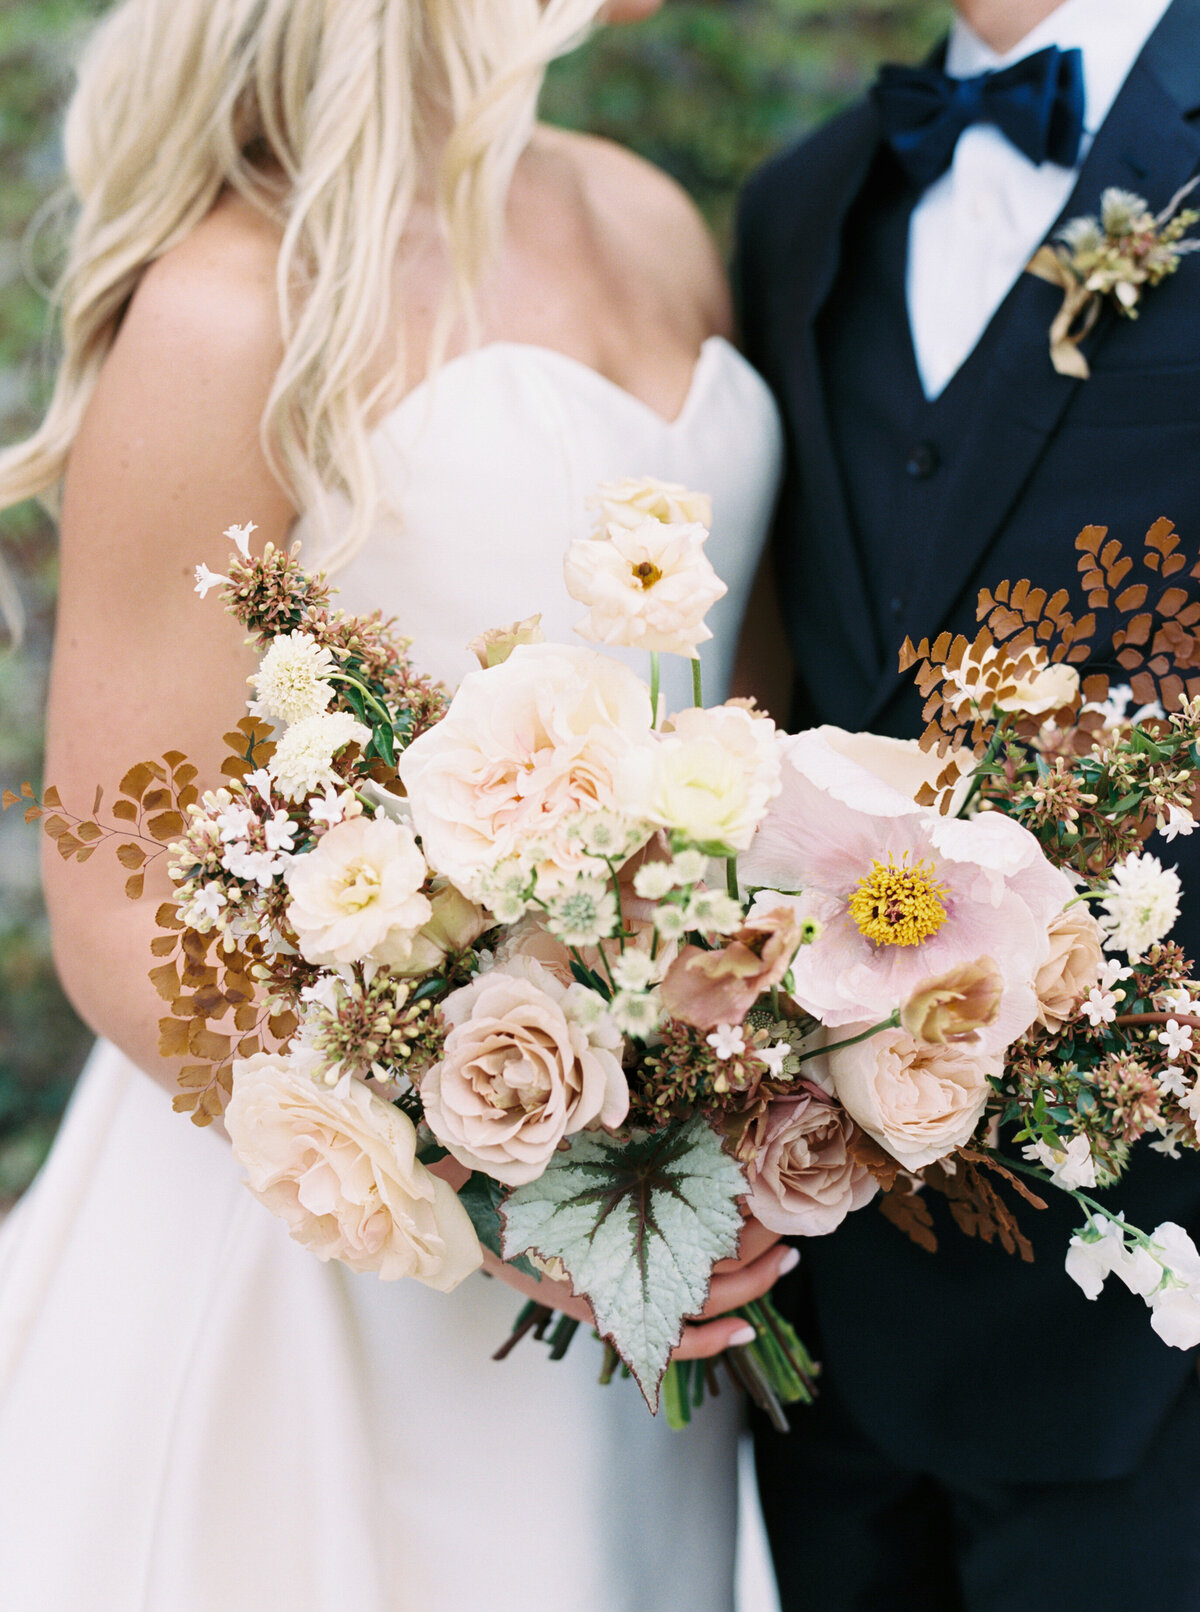 max-owens-design-elegant-autumnal-wedding-04-bridal-bouquet